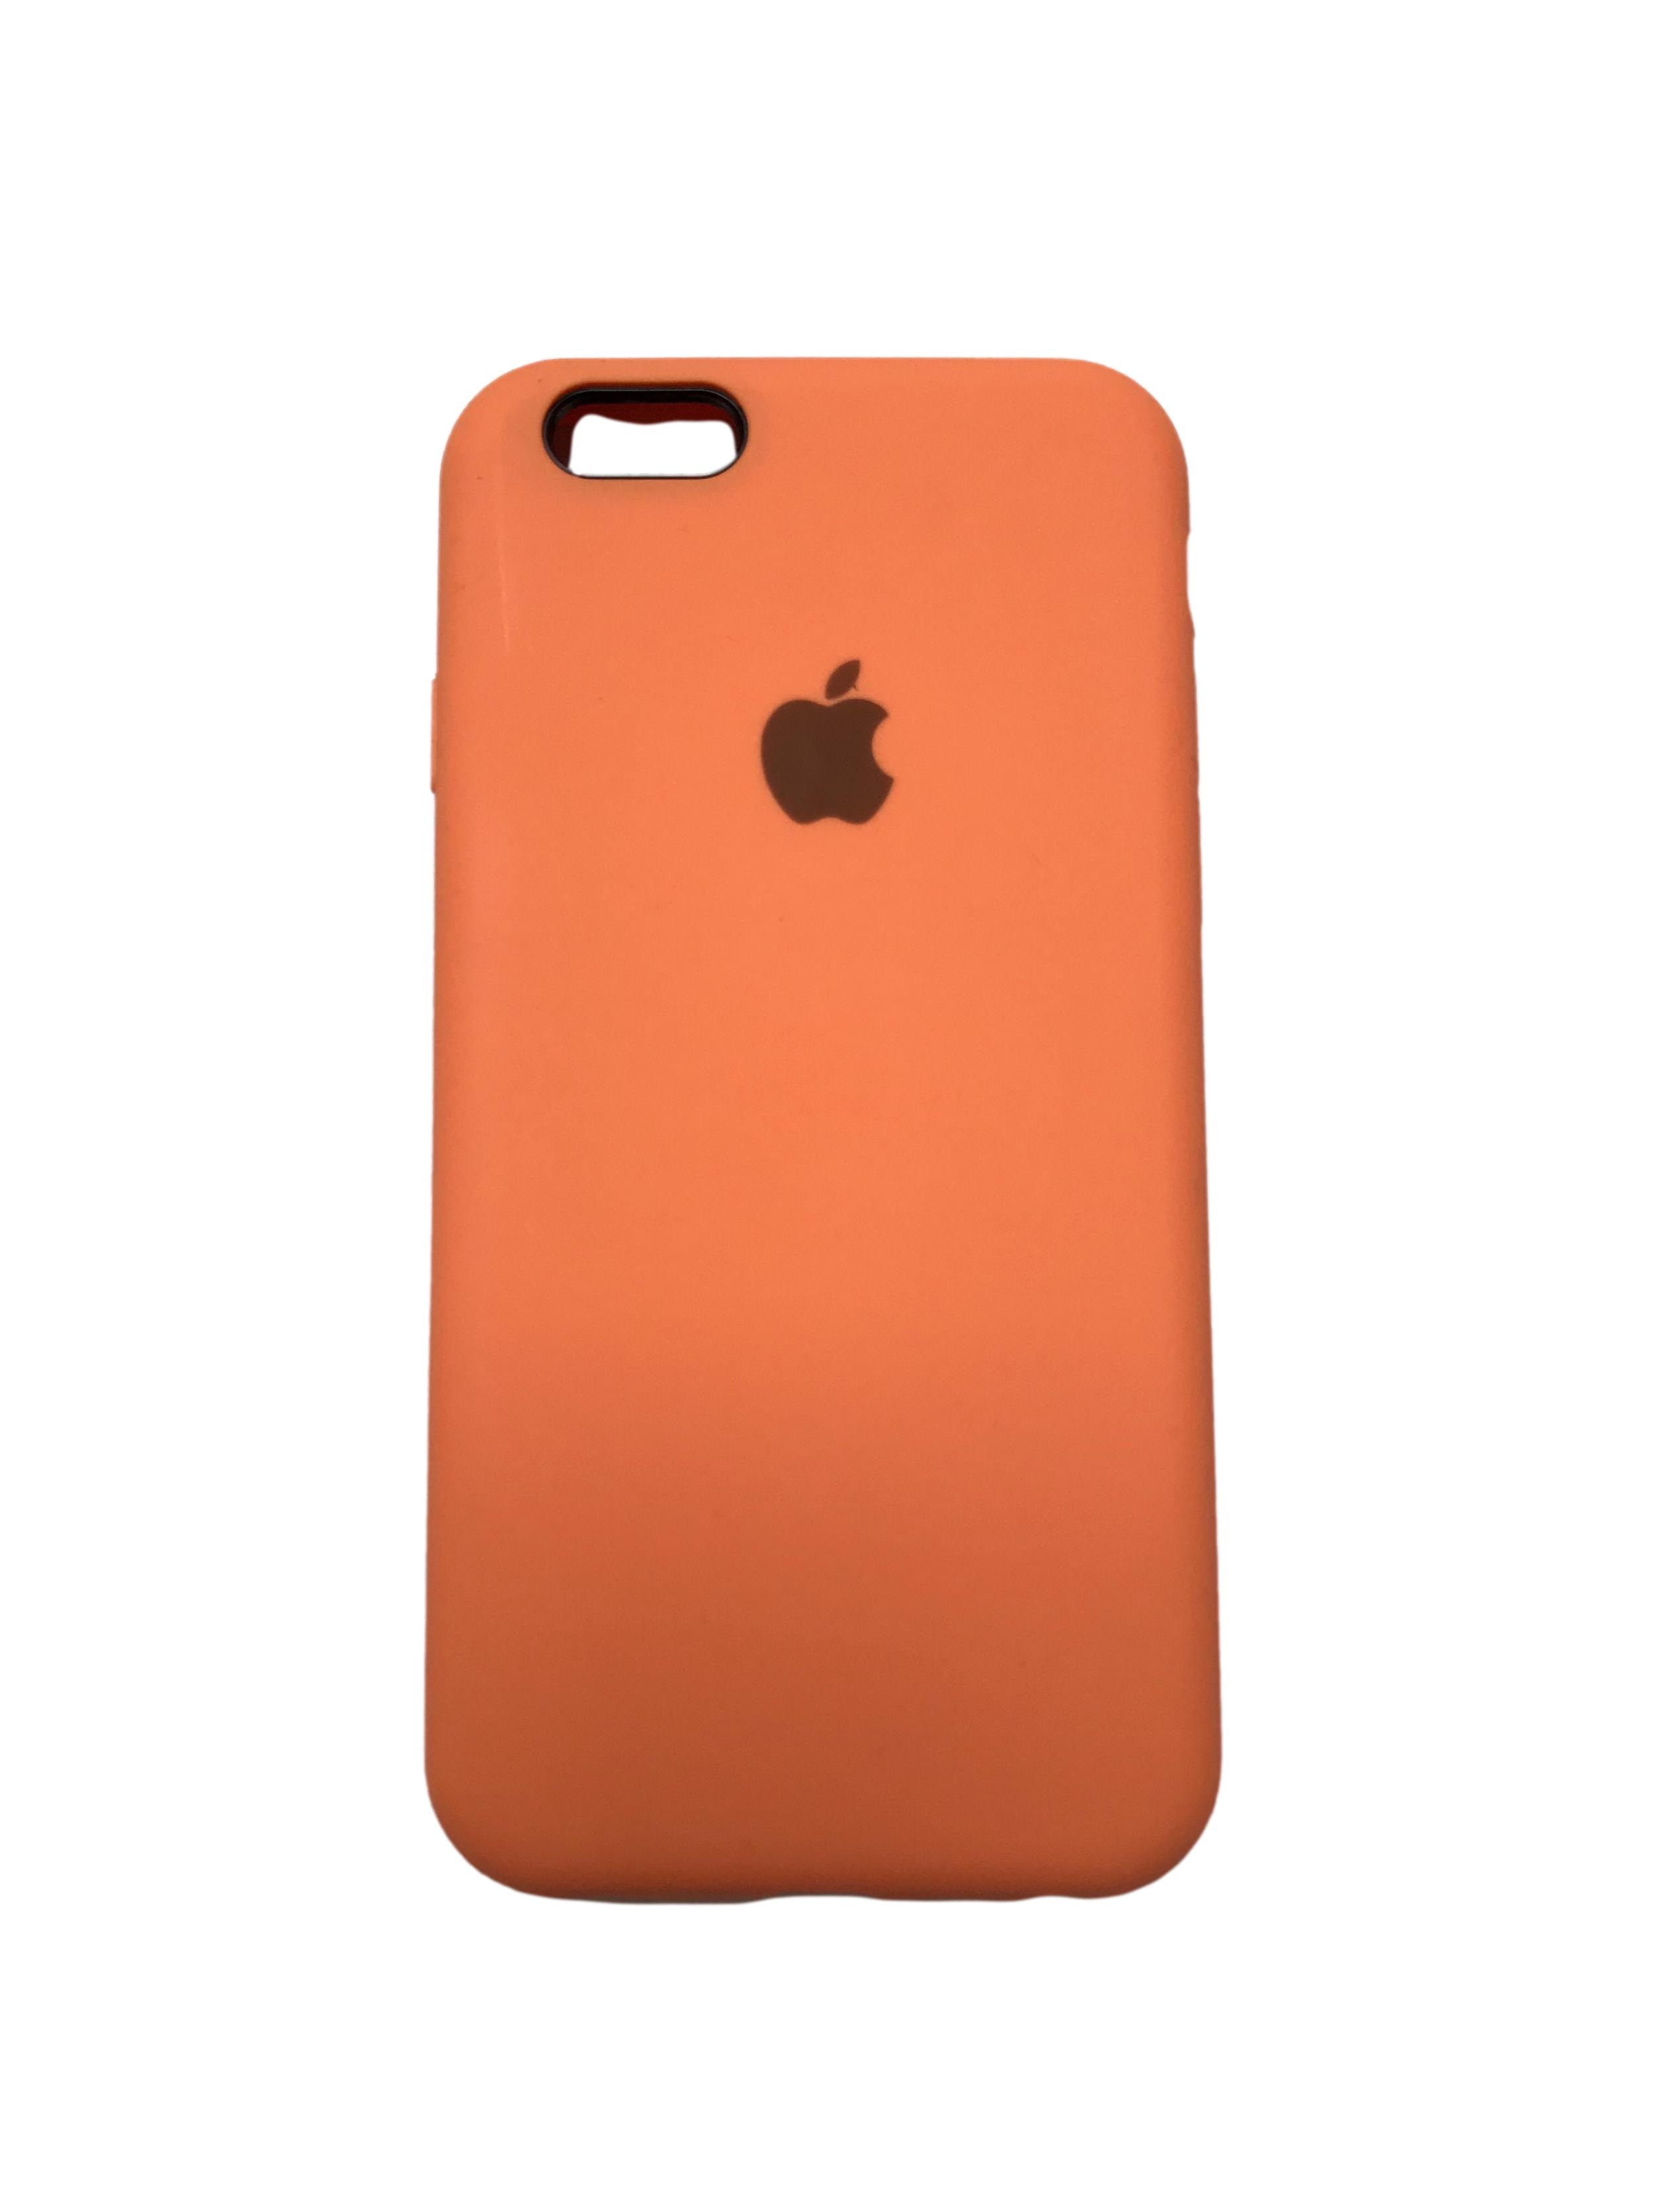 Case Iphone de silicona anaranjada con interior agamuzado. Para iPhone 6 / 6s / 7 / 8 / SE